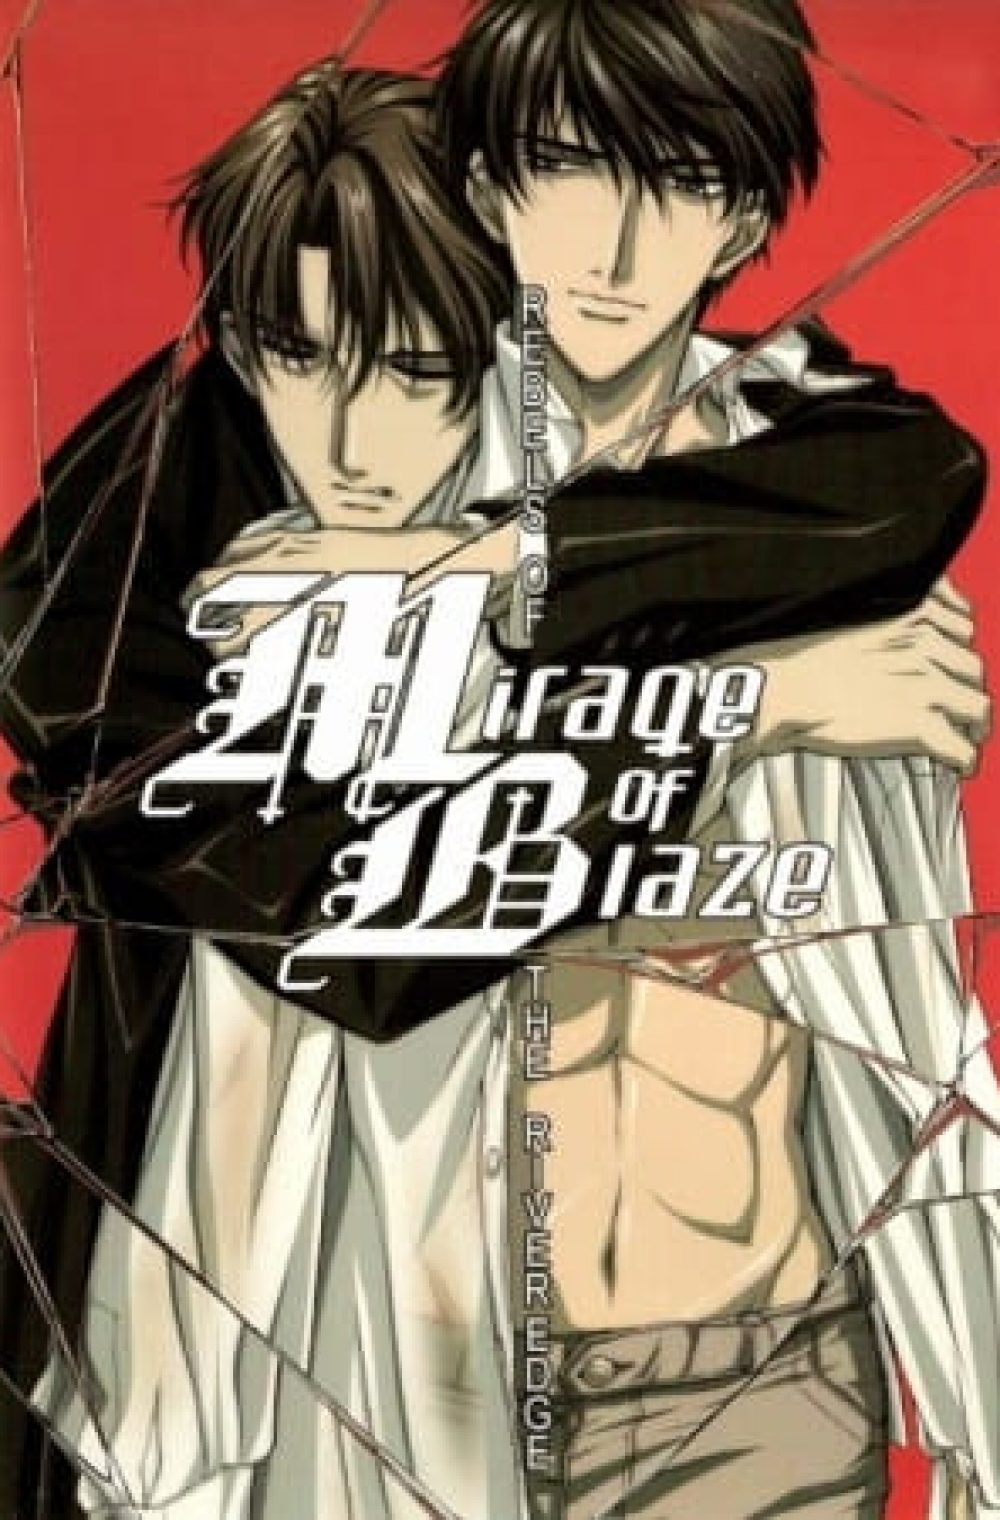 Mirage of Blaze OVA: Rebels of the River Edge (Honoo no Mirage OVA)